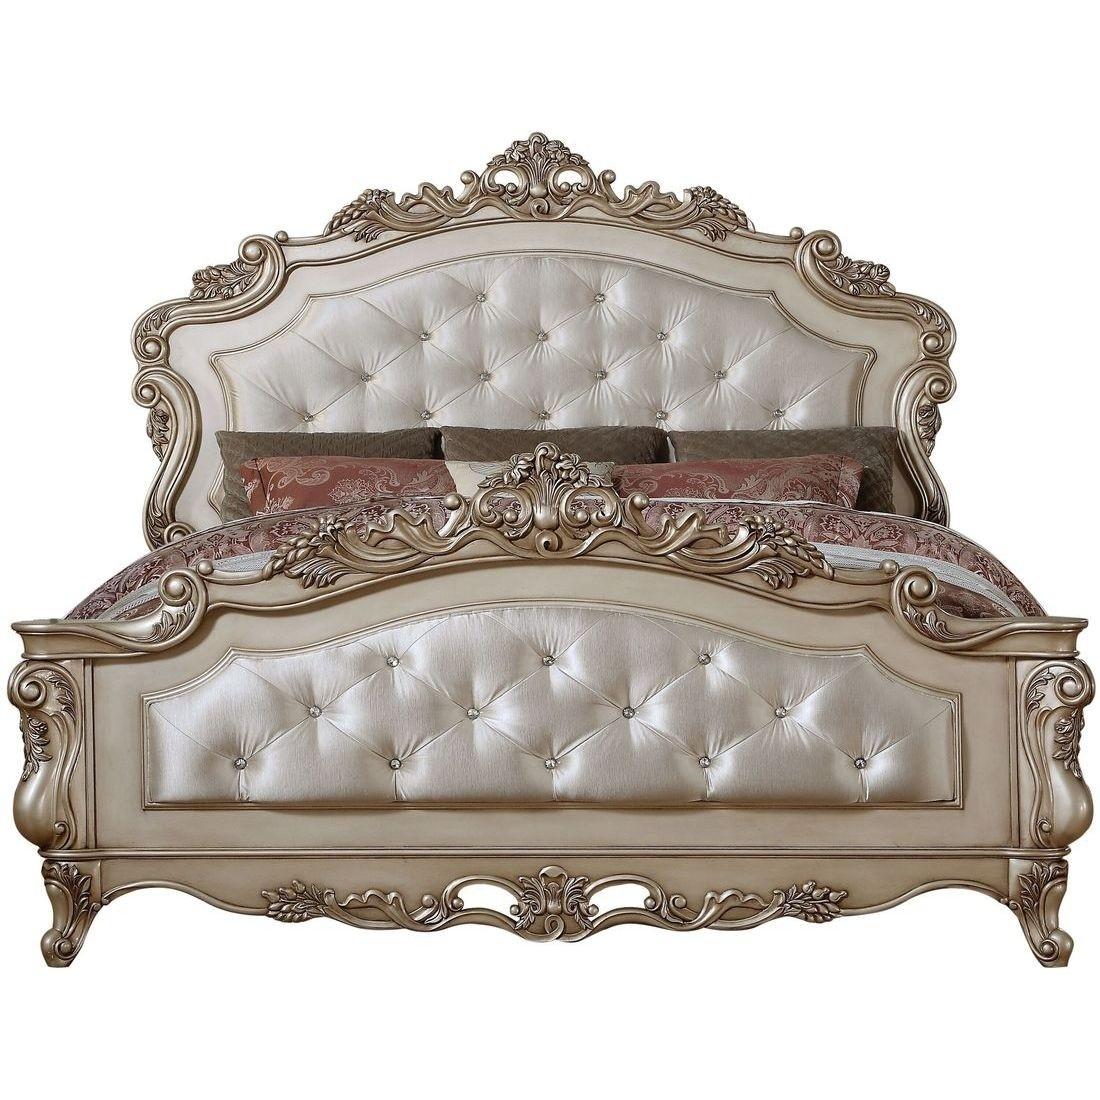 Classic, Traditional Panel Bed Gorsedd Gorsedd-27437EK in Antique White, Cream Fabric